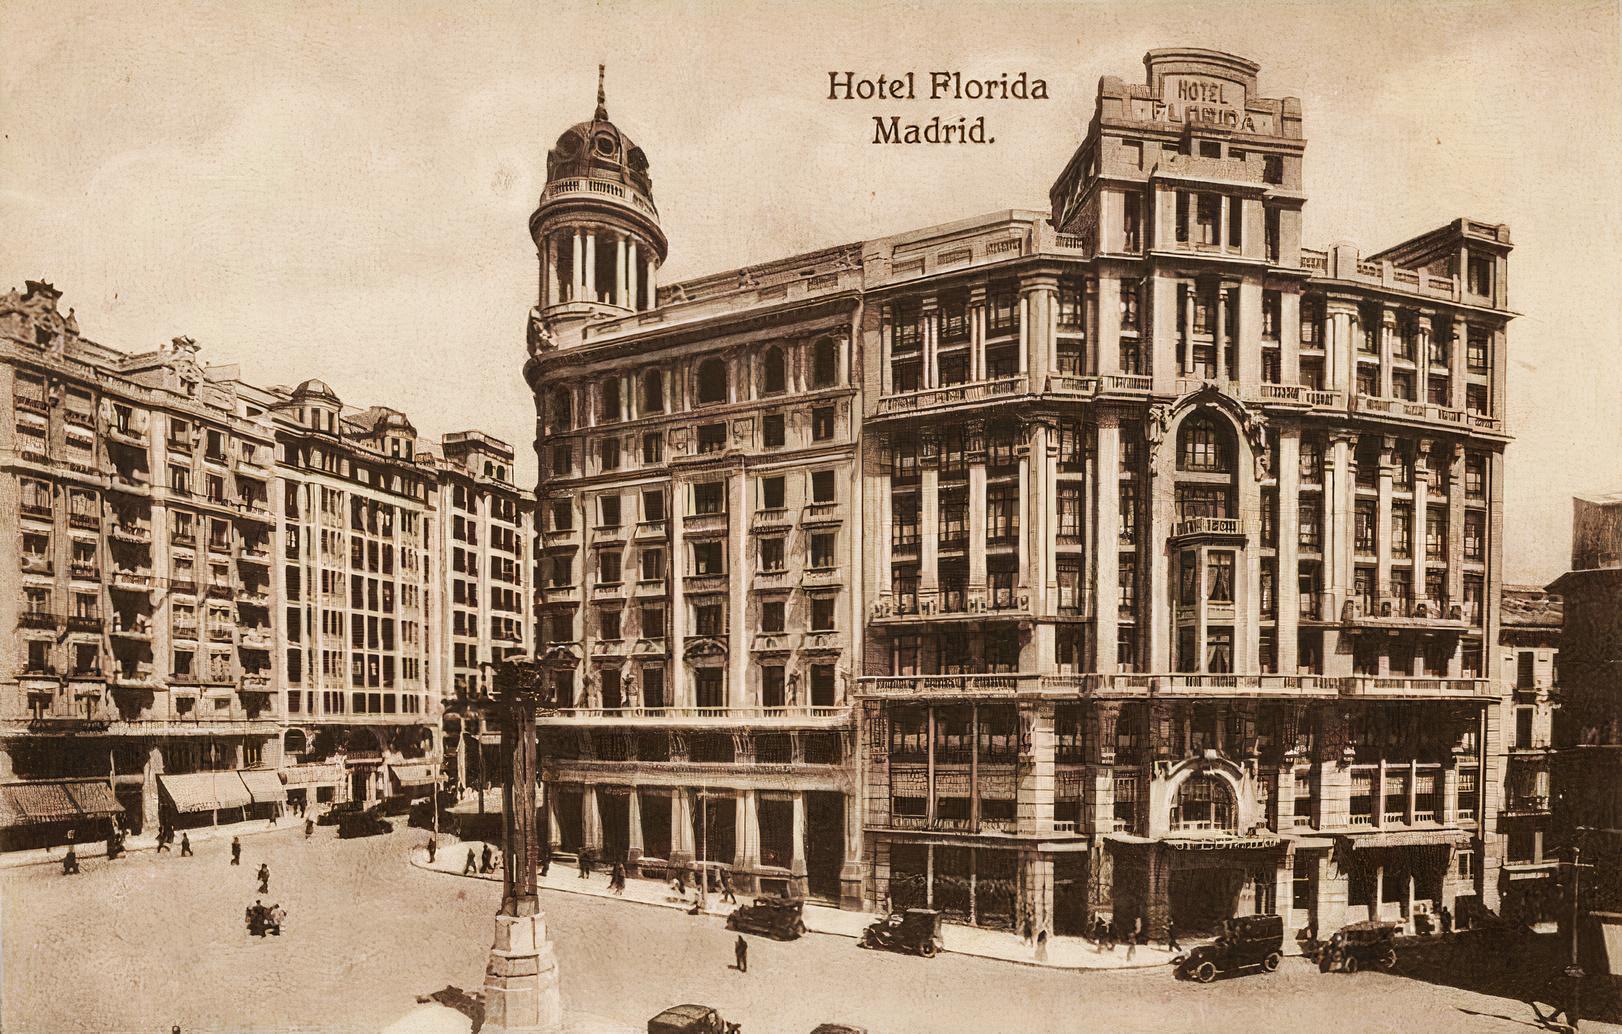 Hotel La Florida de Madrid, vía wikimedia commons